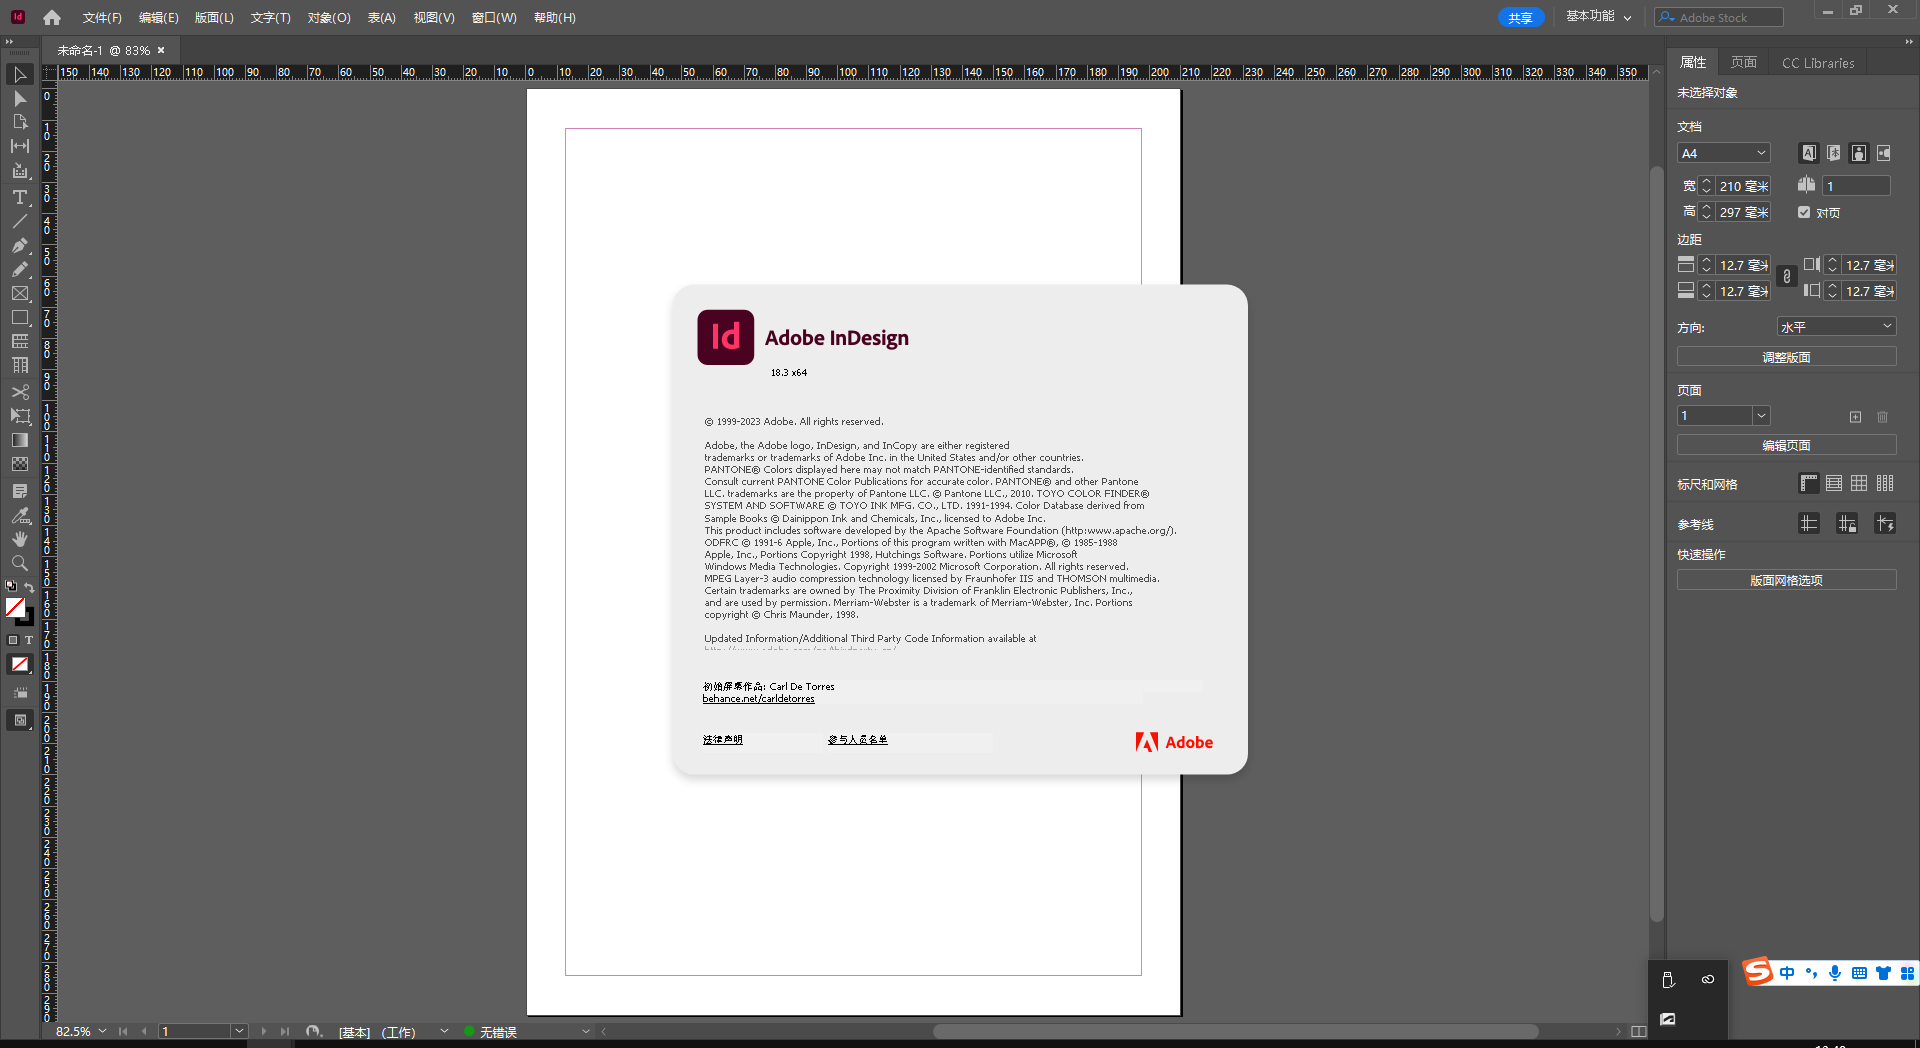 Adobe InDesign 2023 v18.5.0.57 instal the new version for mac